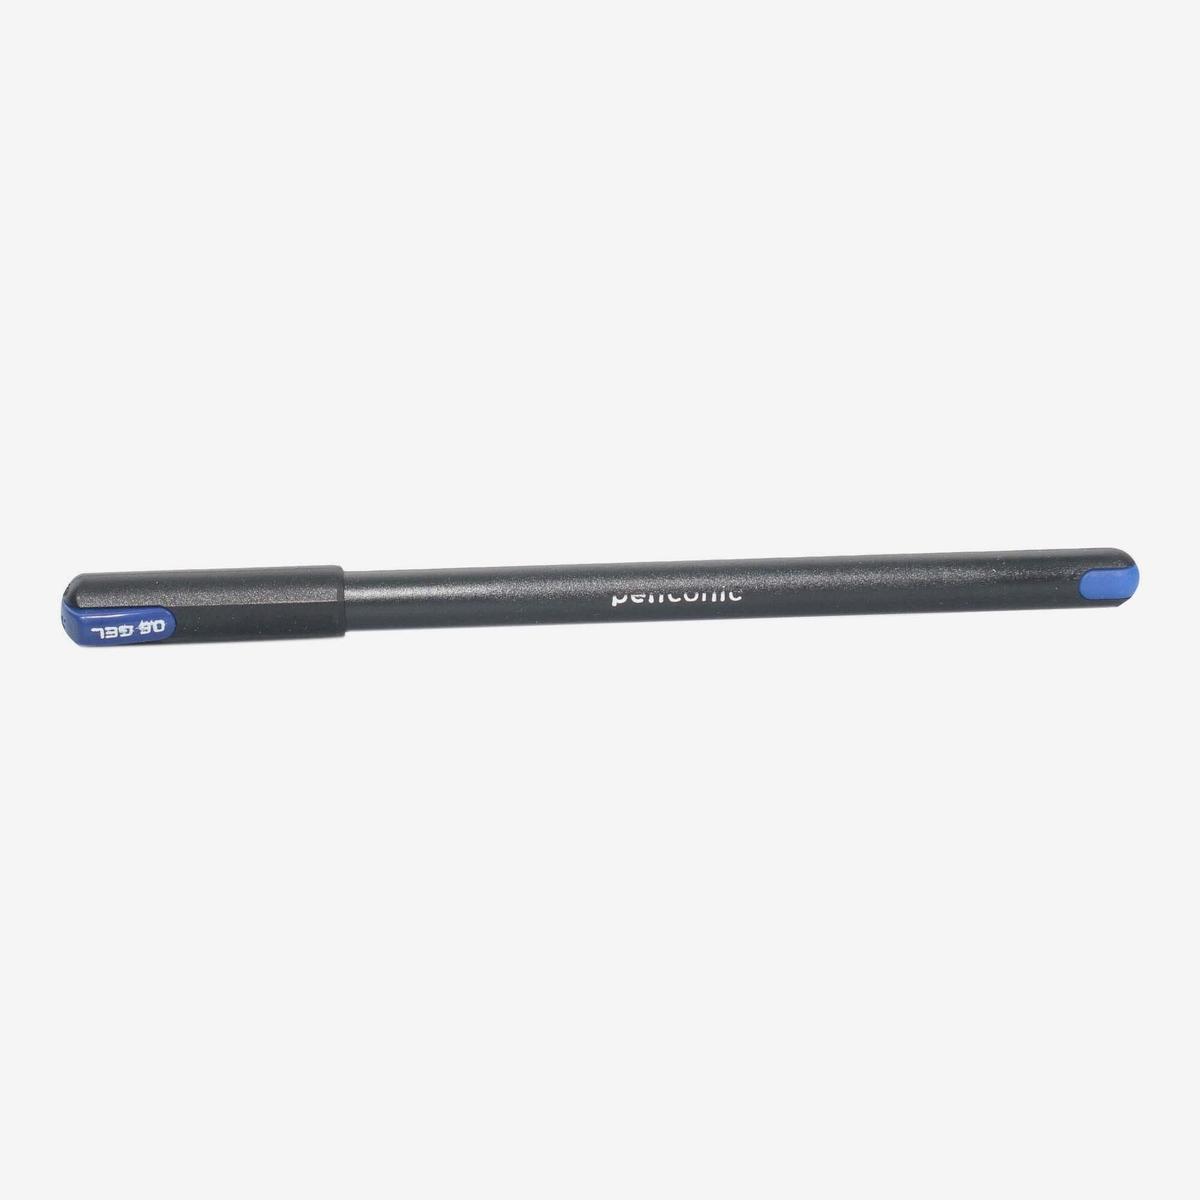 pentonic blue gel0 6 pen 10 pcs